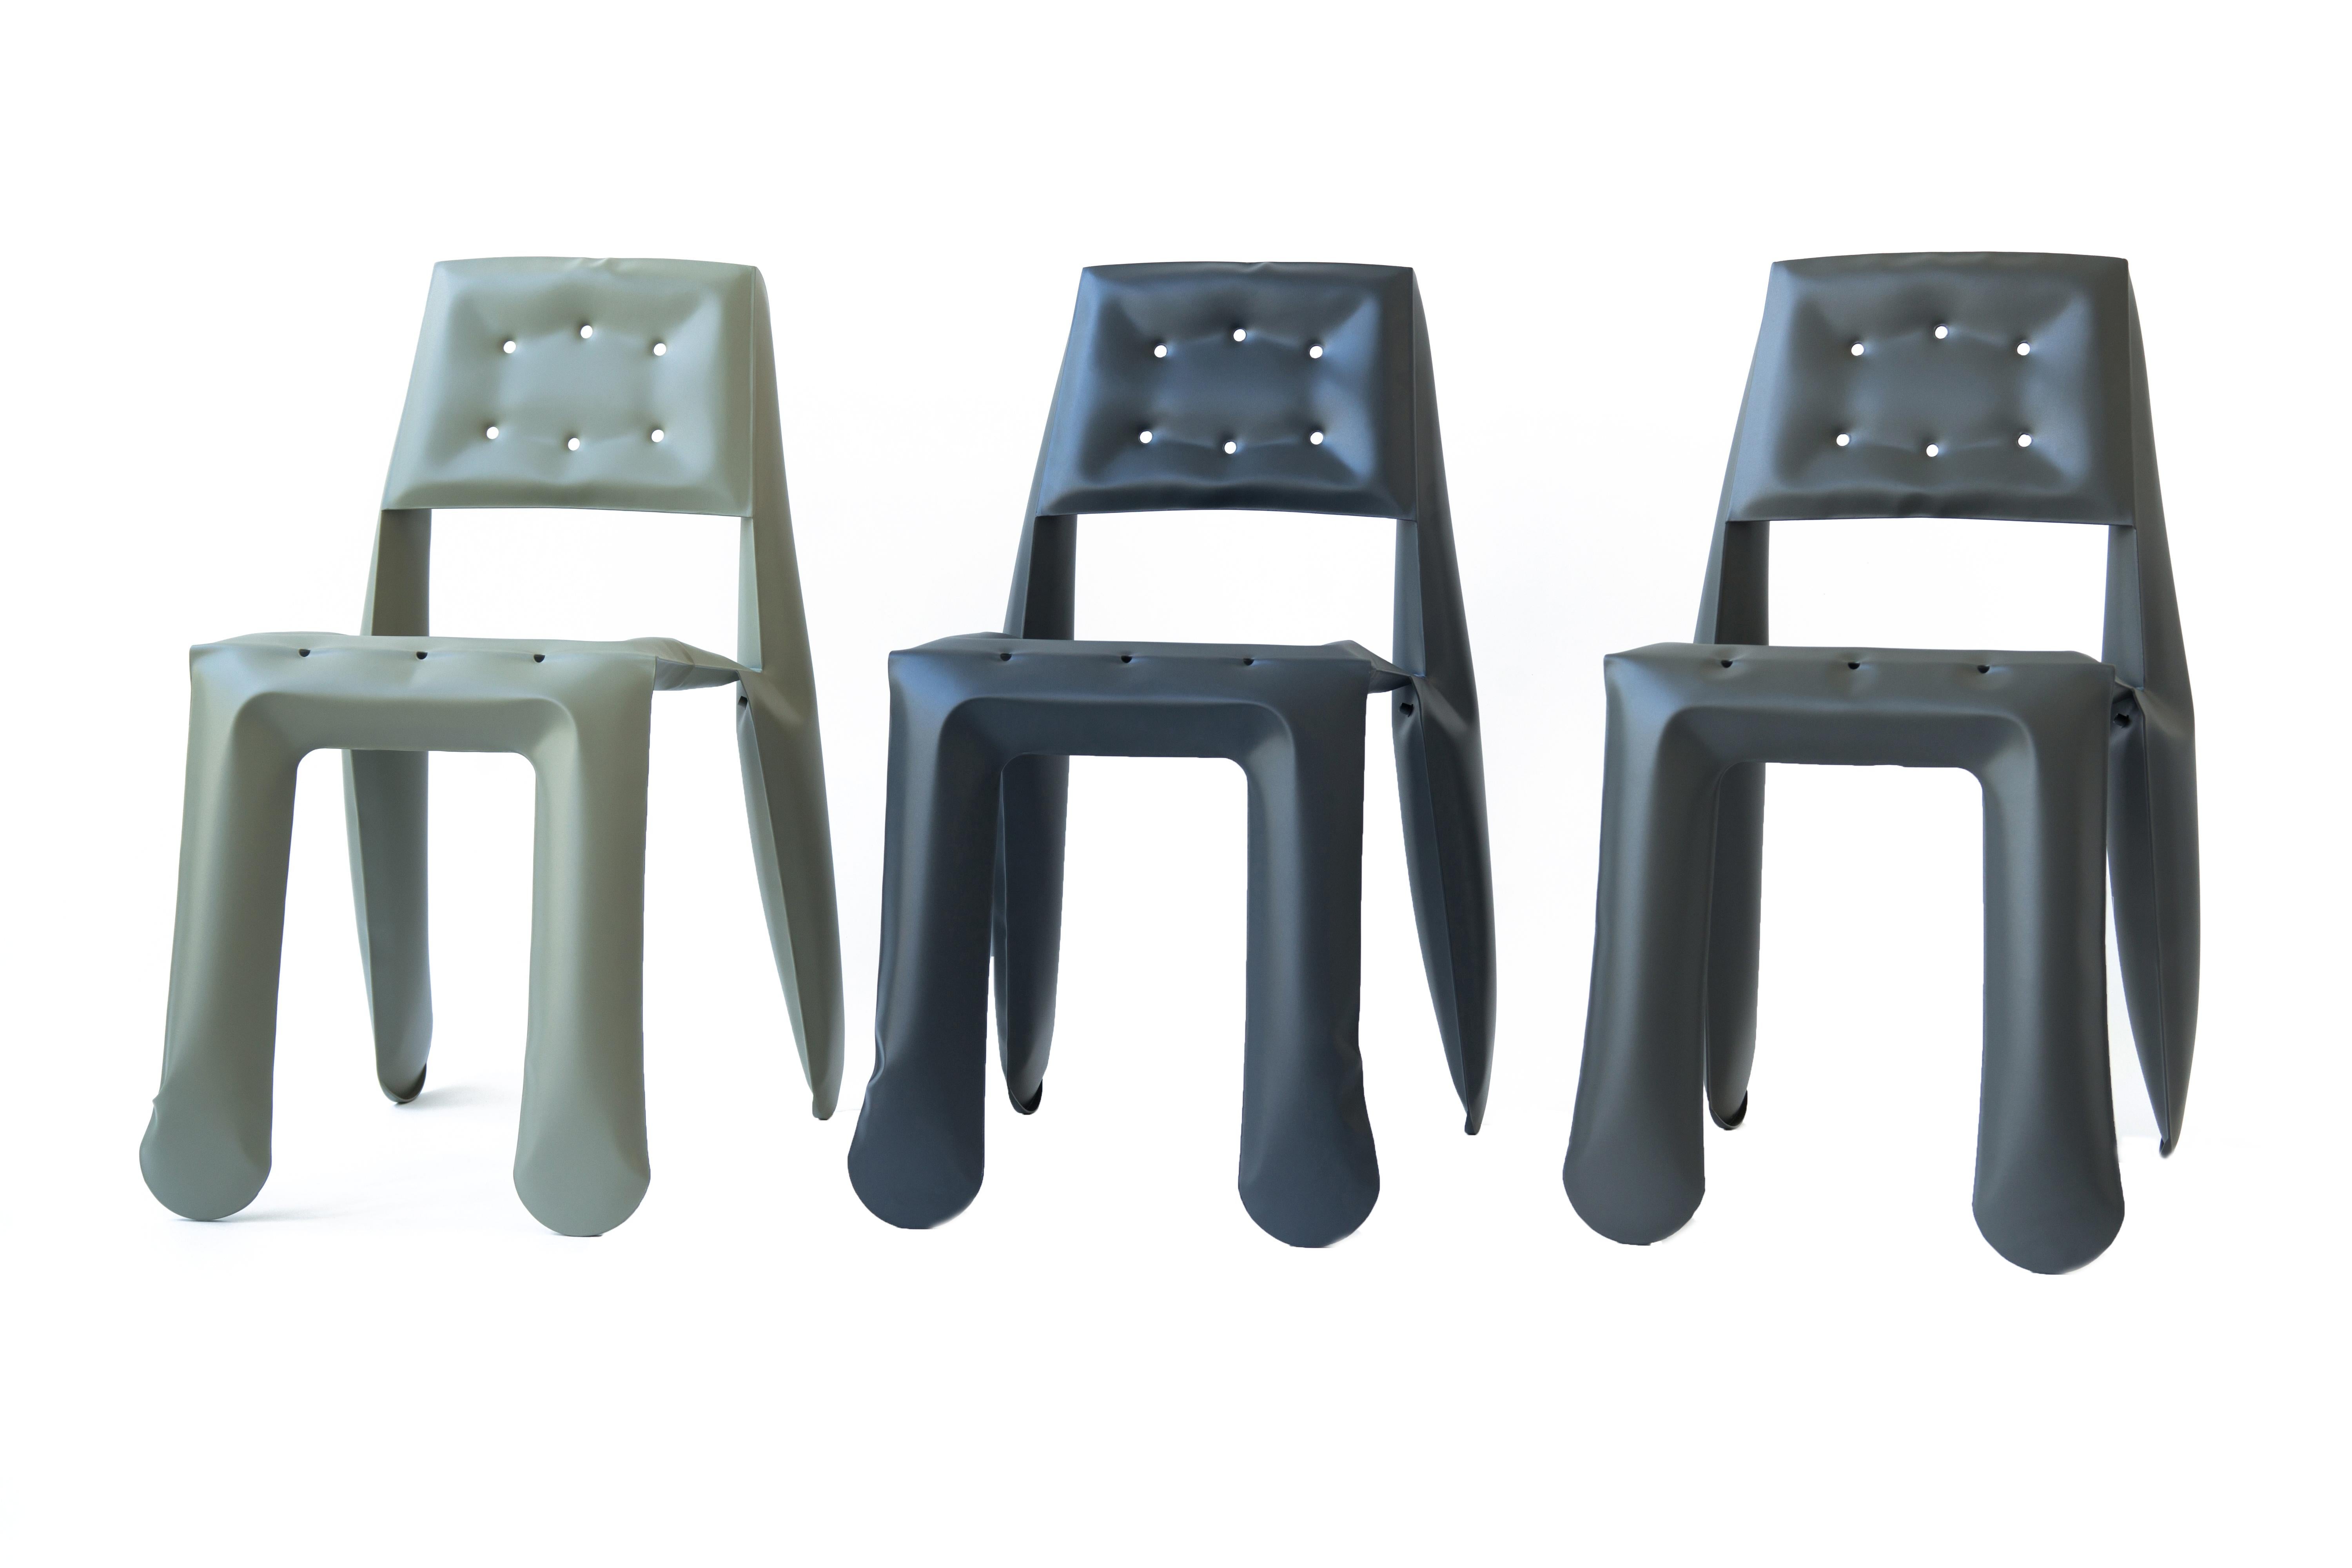 Moss Grey Carbon Steel Chippensteel 0.5 Sculptural Chair by Zieta For Sale 4